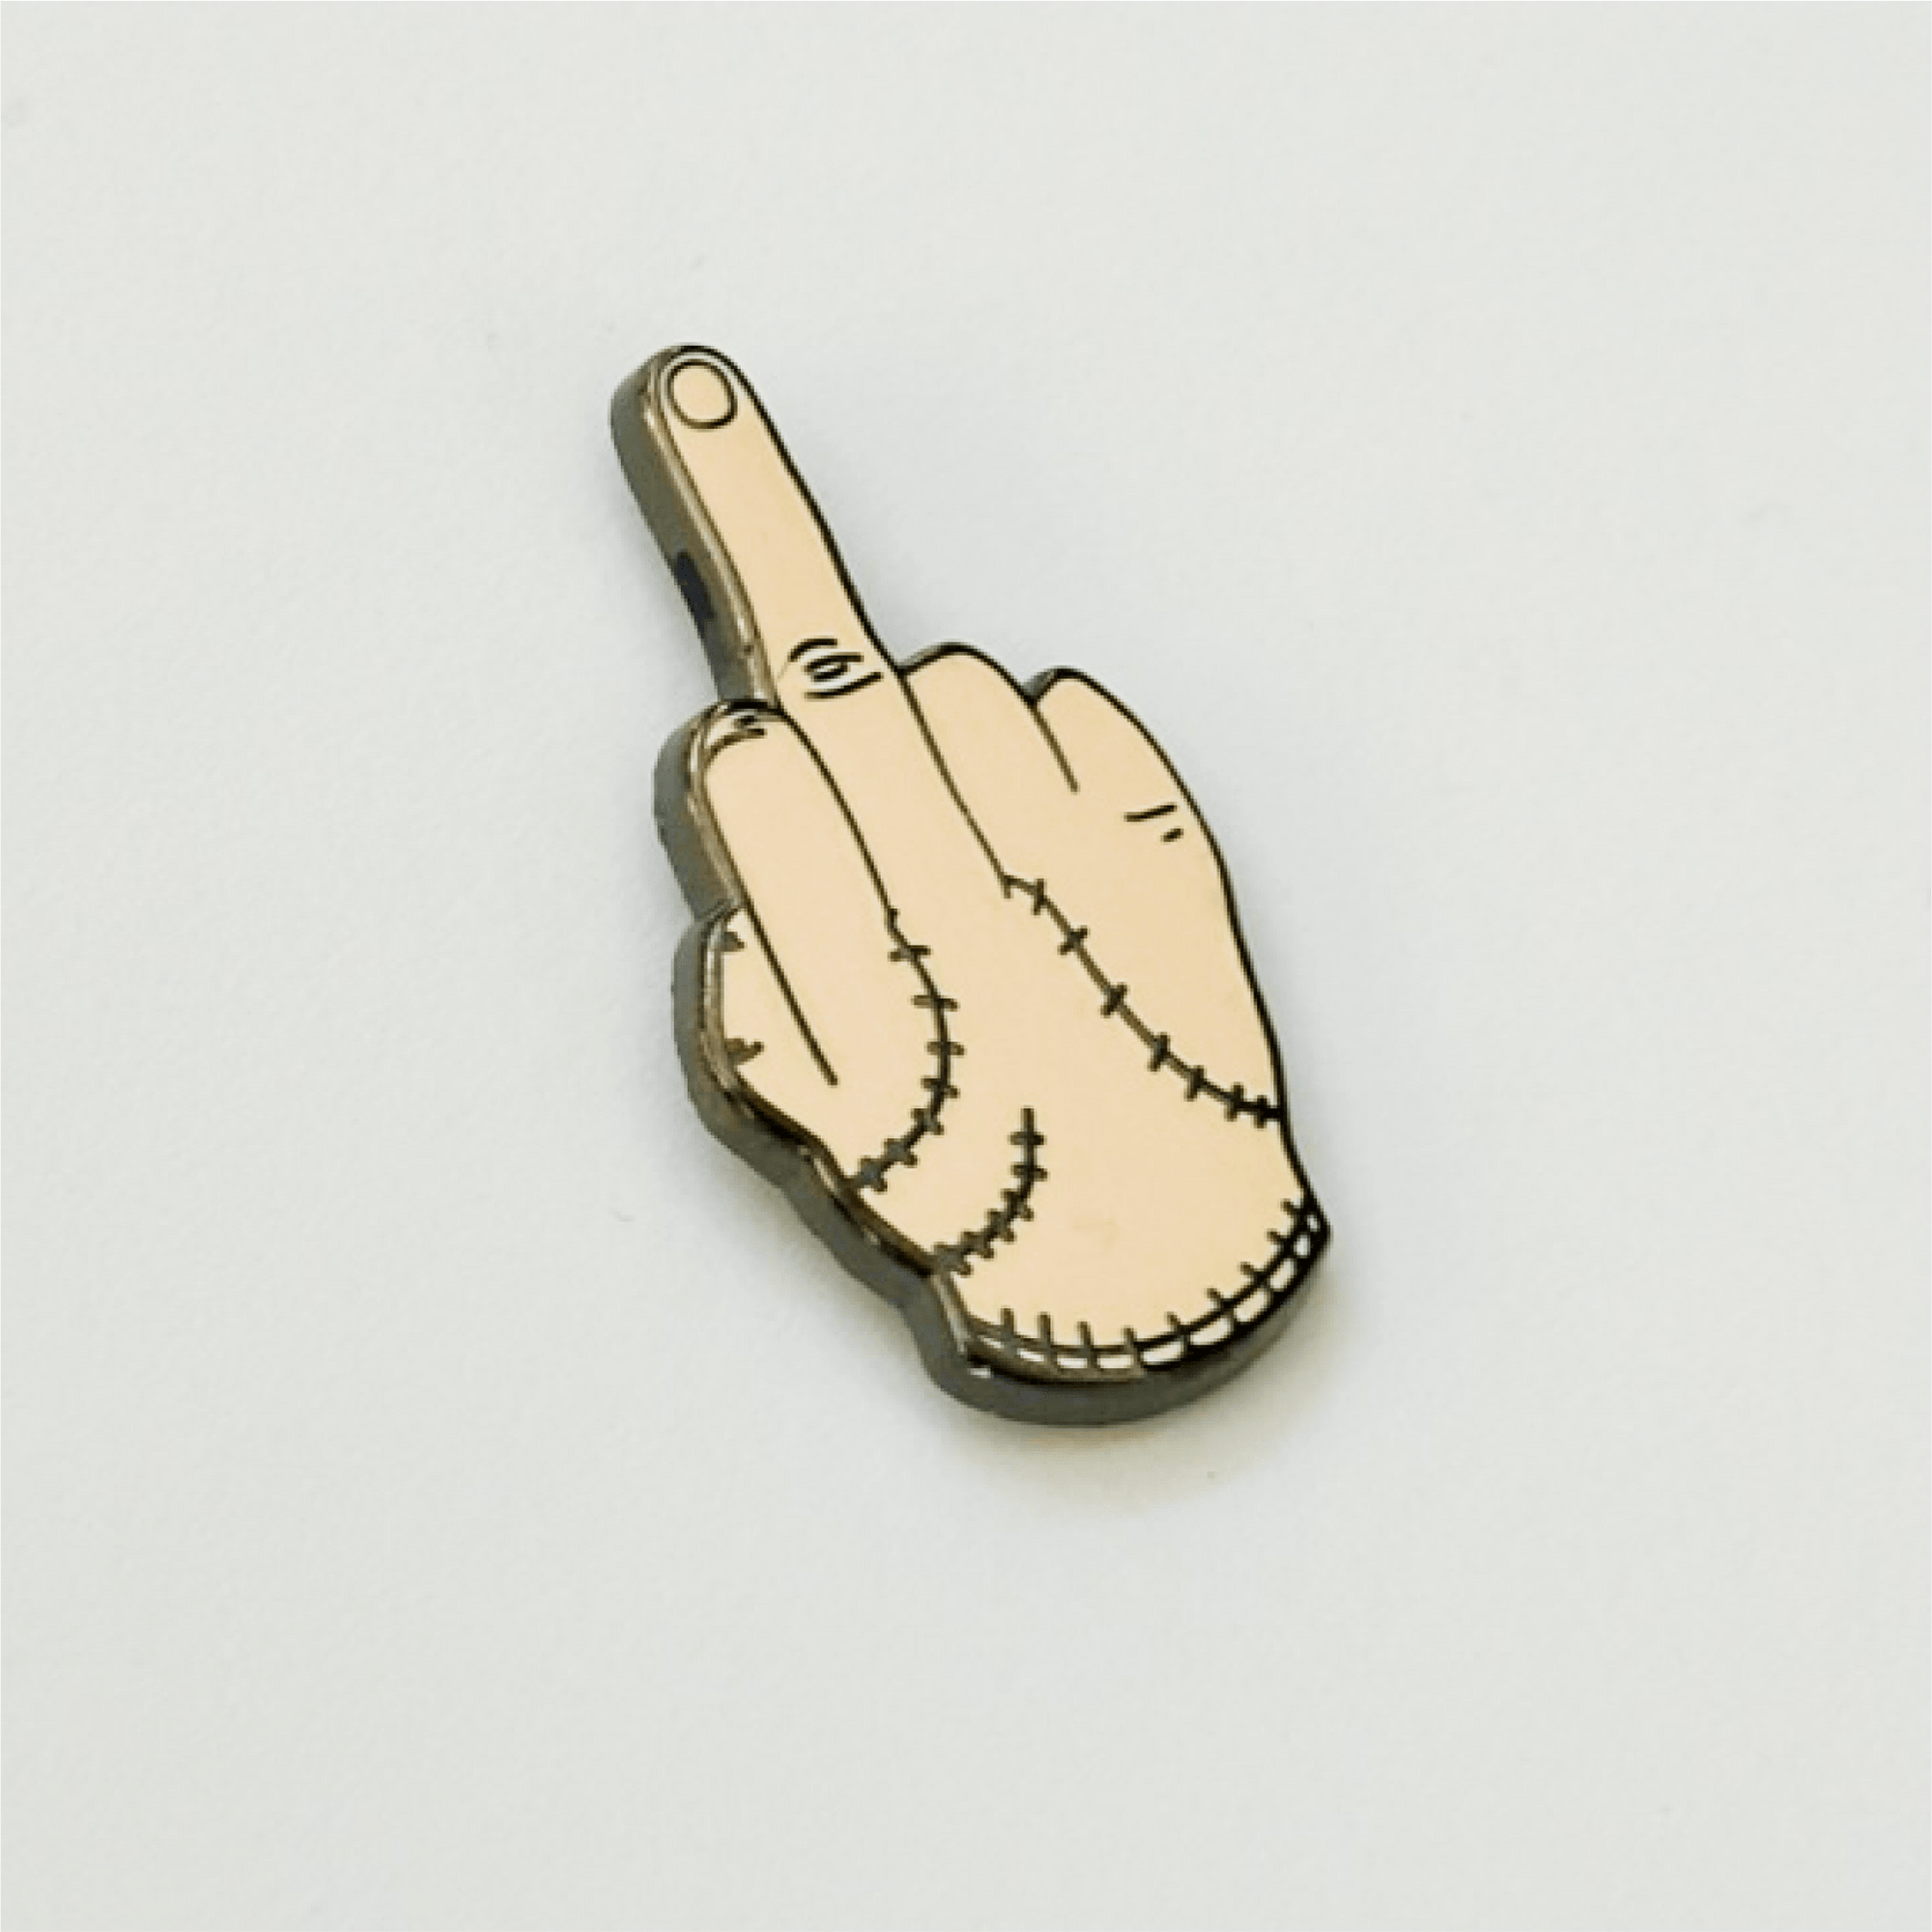 Pinbuds Enamel pin Thing pin (Fuck You flipping bird hand from Wednesday)